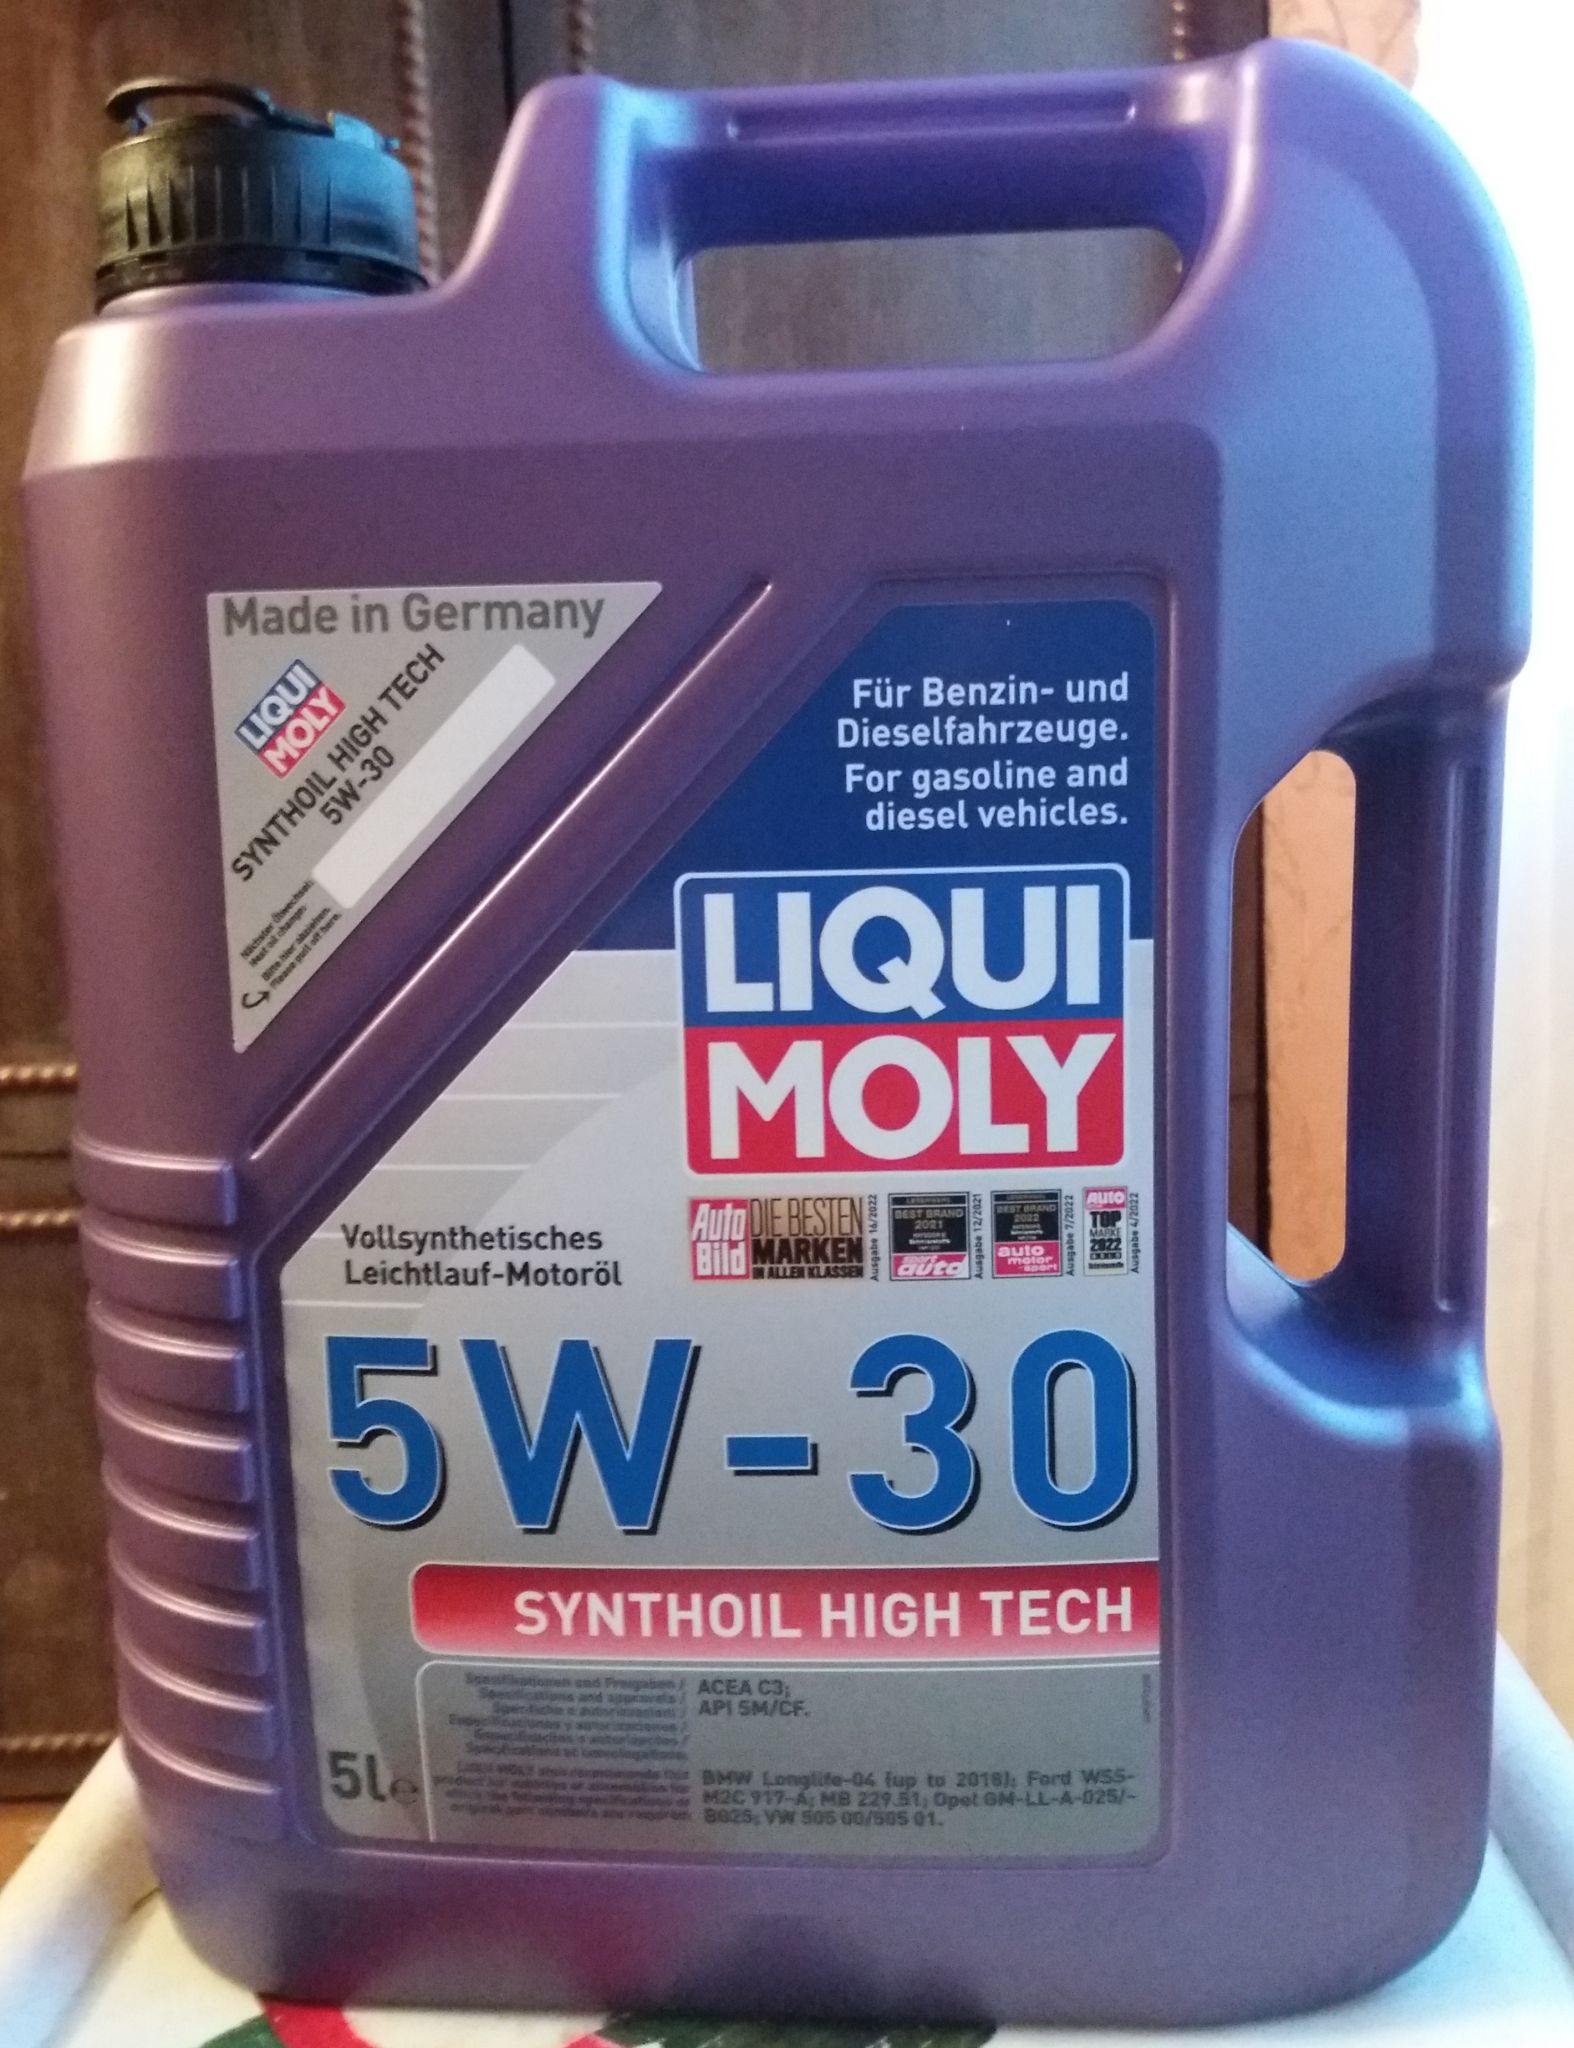 Moly synthoil high tech 5w 30. Moly Synthoil High Tech 5w/30, артикул: 9076. Масло Ликви моли детальная фото.